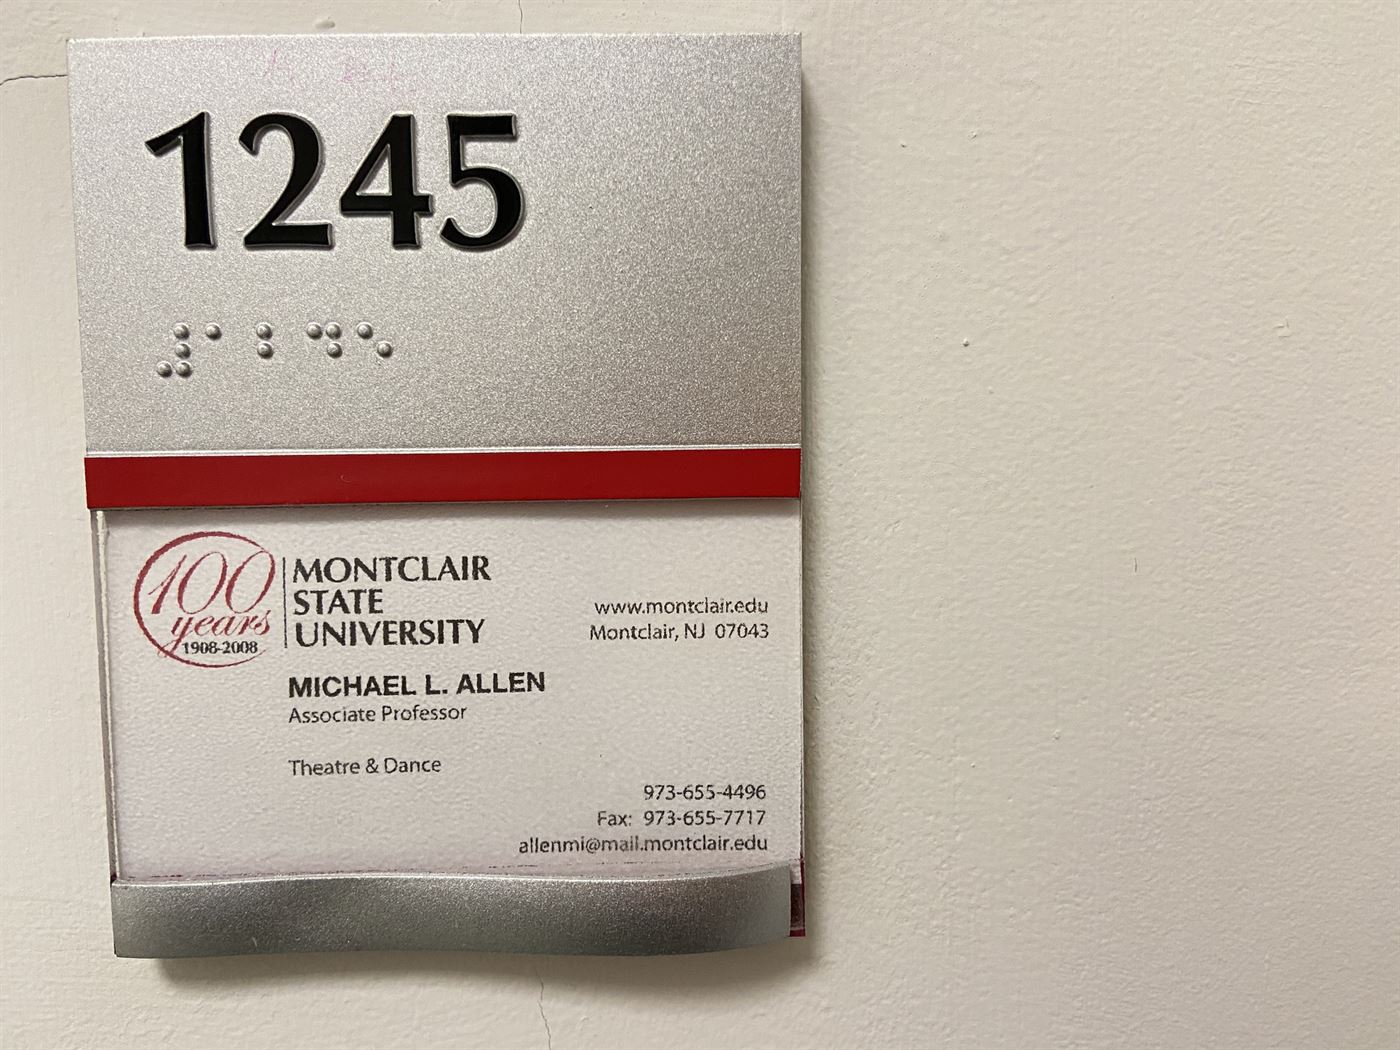 Professor Allen's business card next to his office room number. John LaRosa | The Montclarion